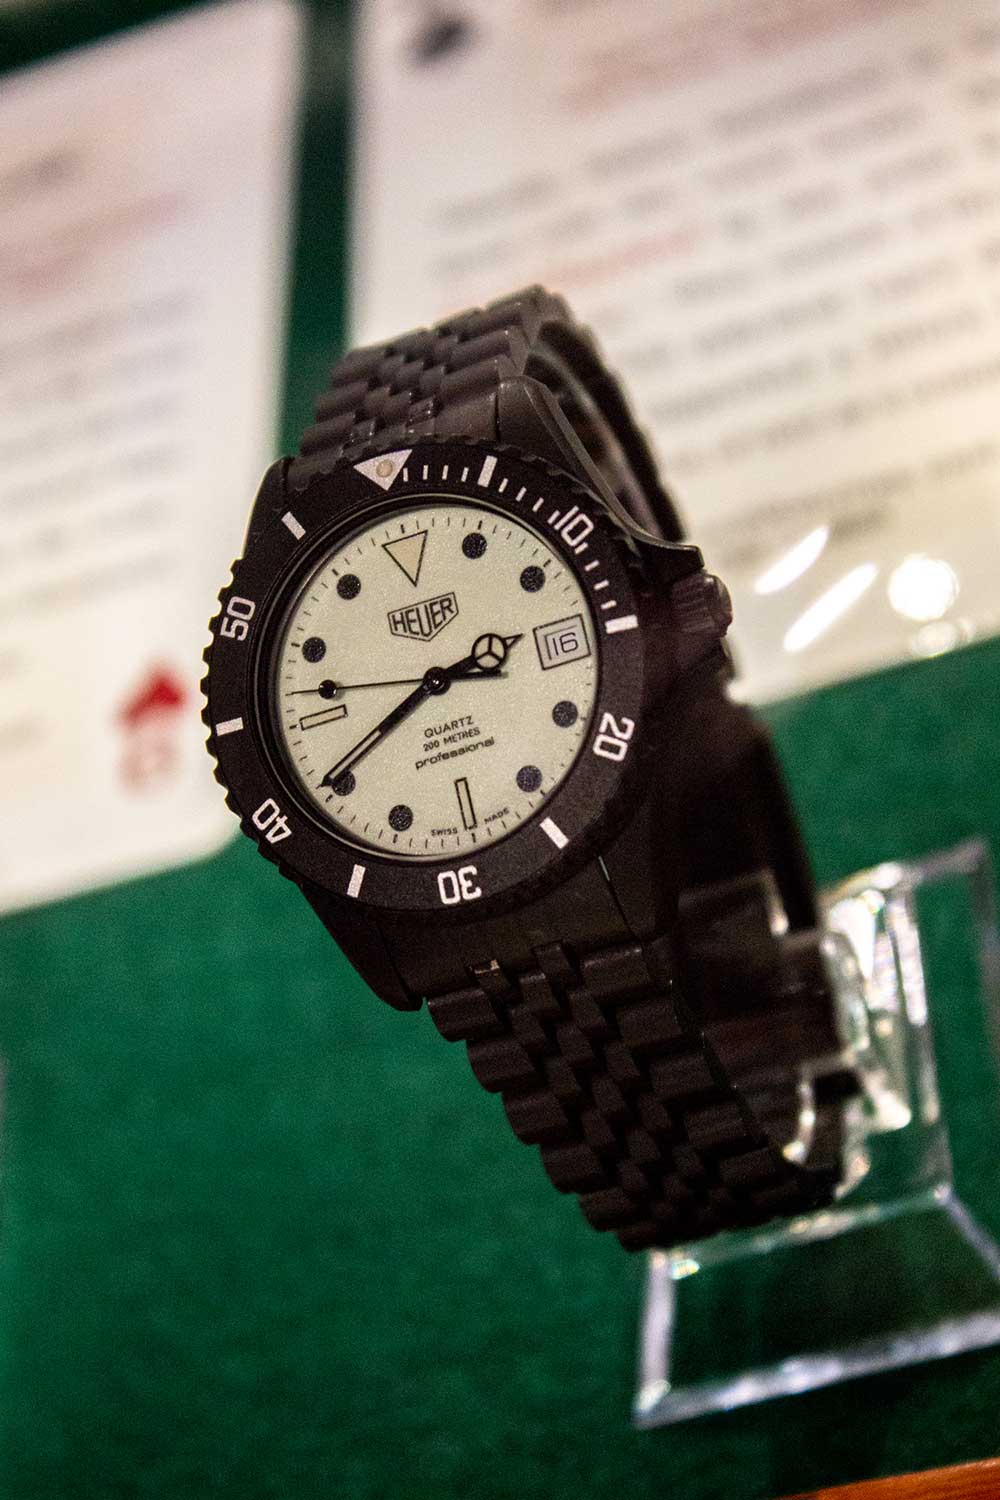 TAG Heuer Night Diver 980.031 Swiss quartz watch